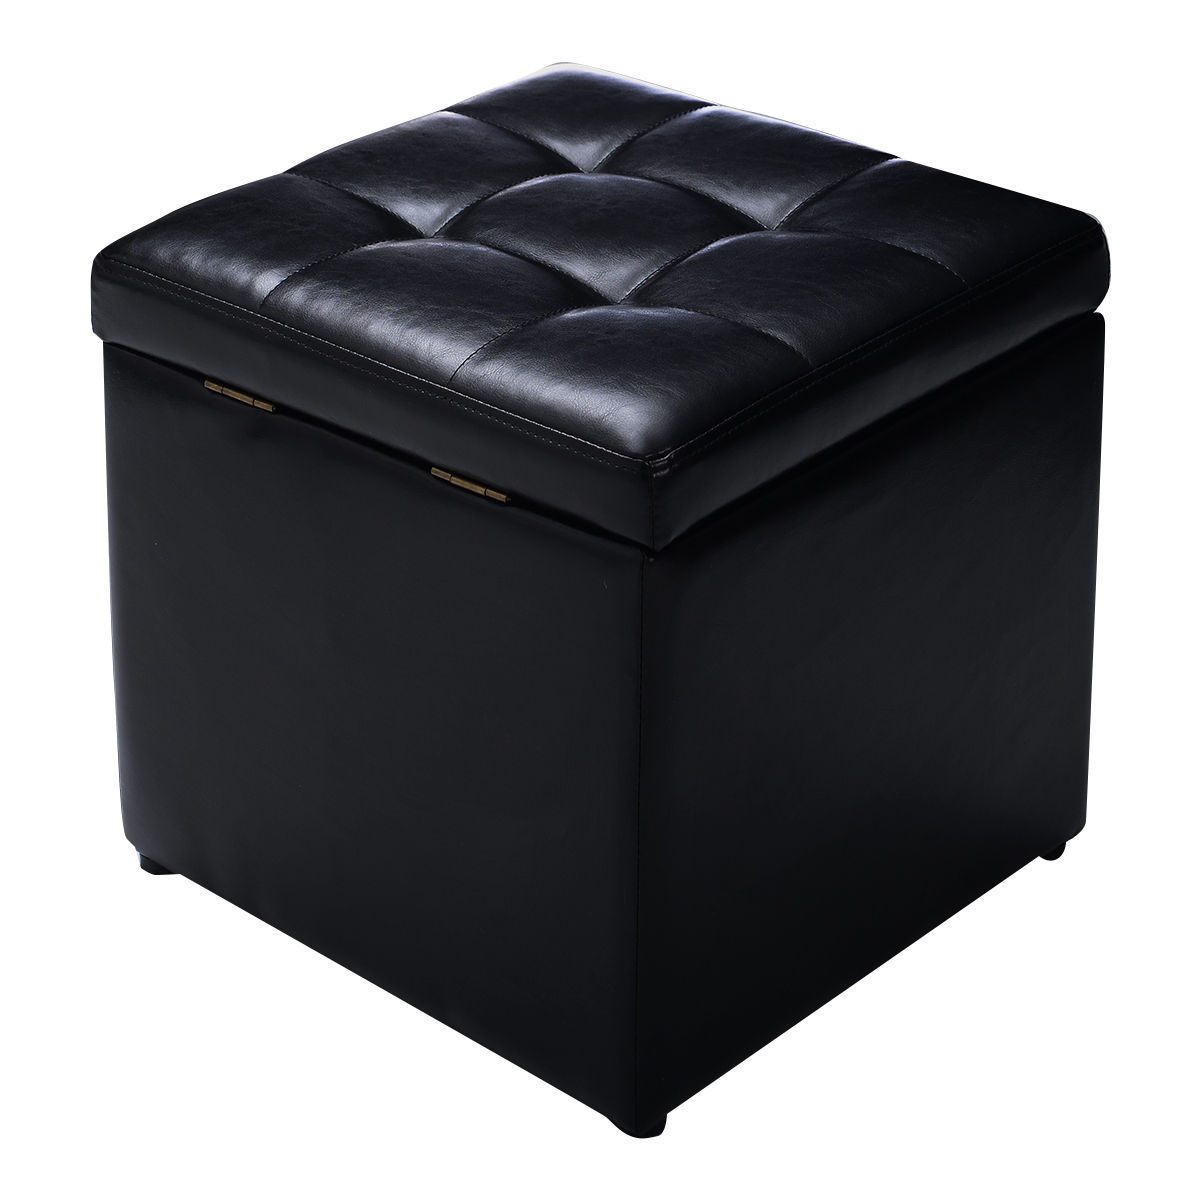 High Quality PU Leather Cube Ottoman Storage Seat